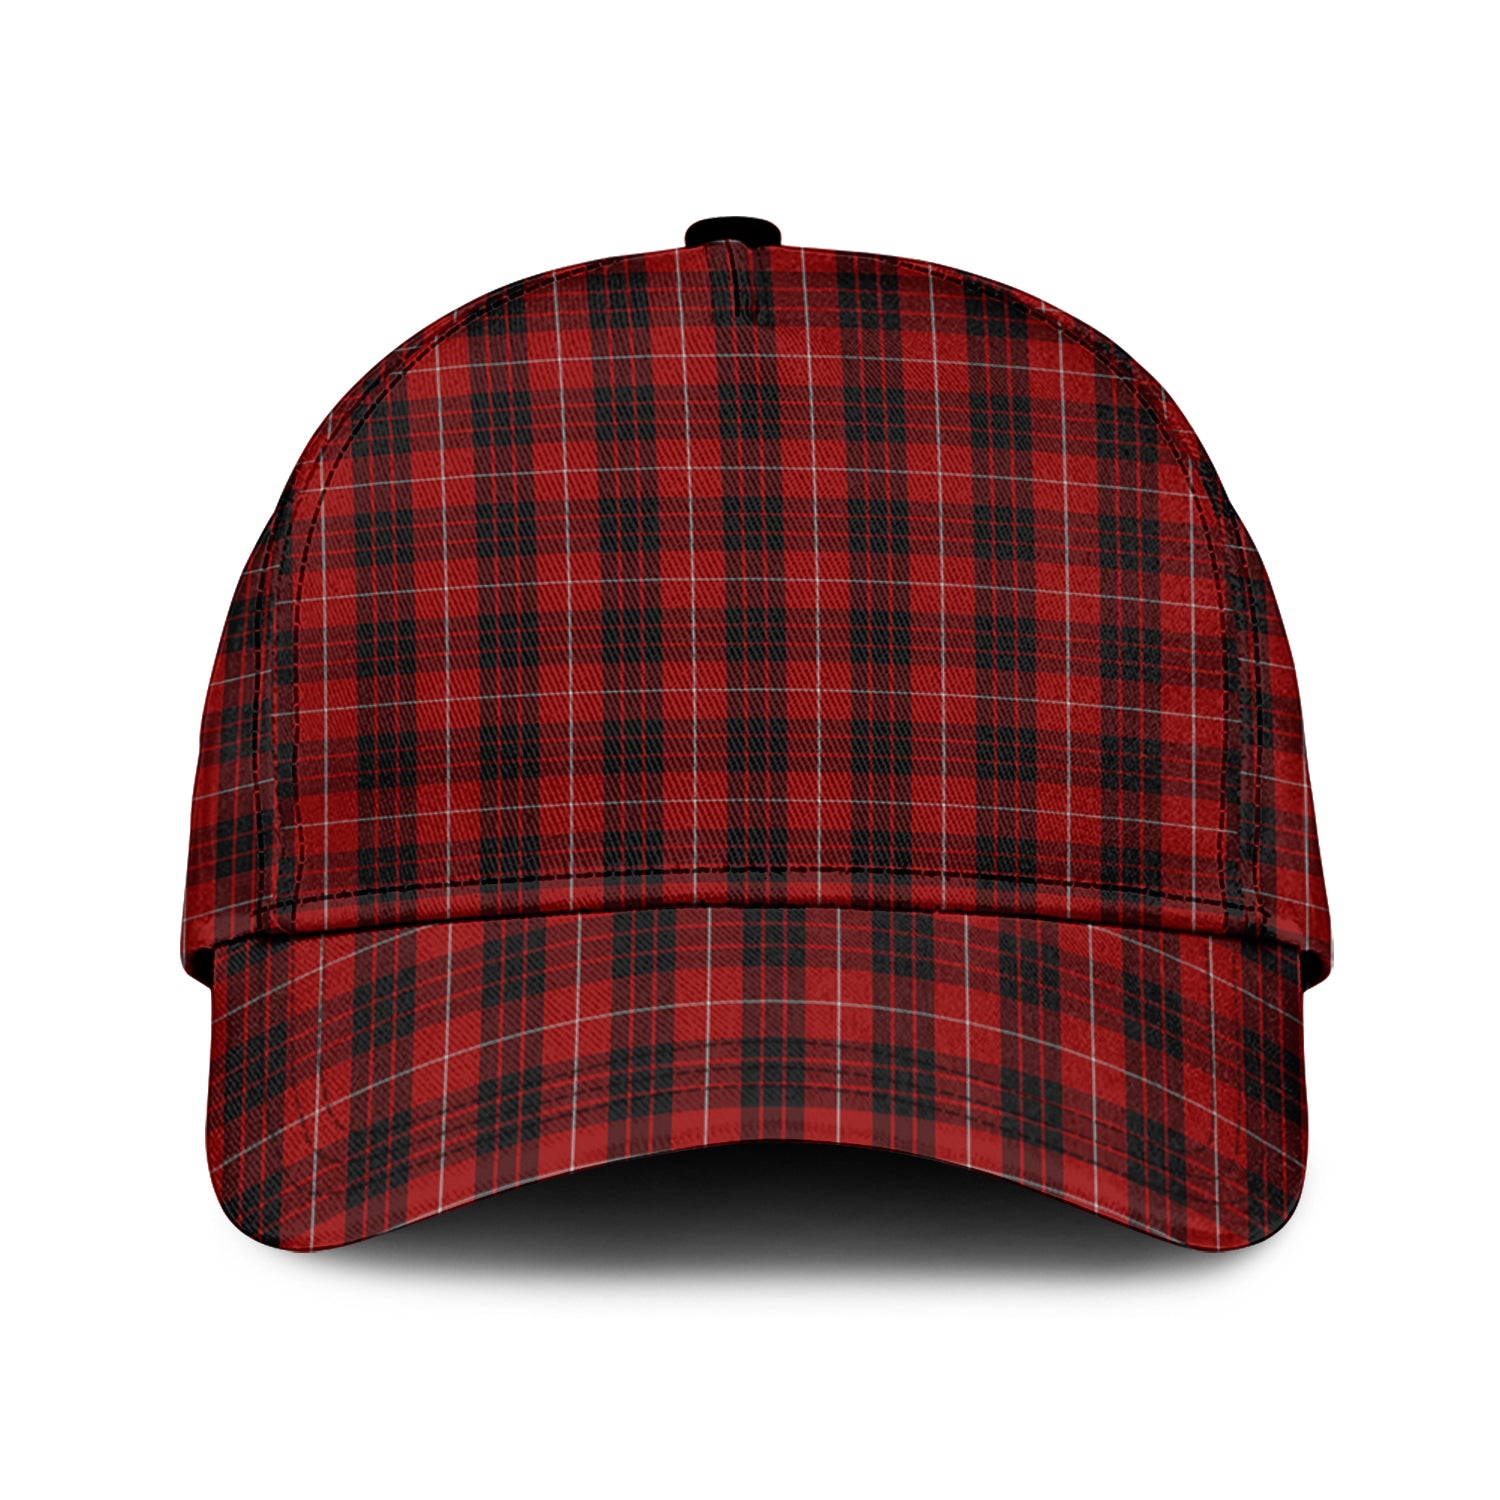 munro-black-and-red-tartan-classic-cap